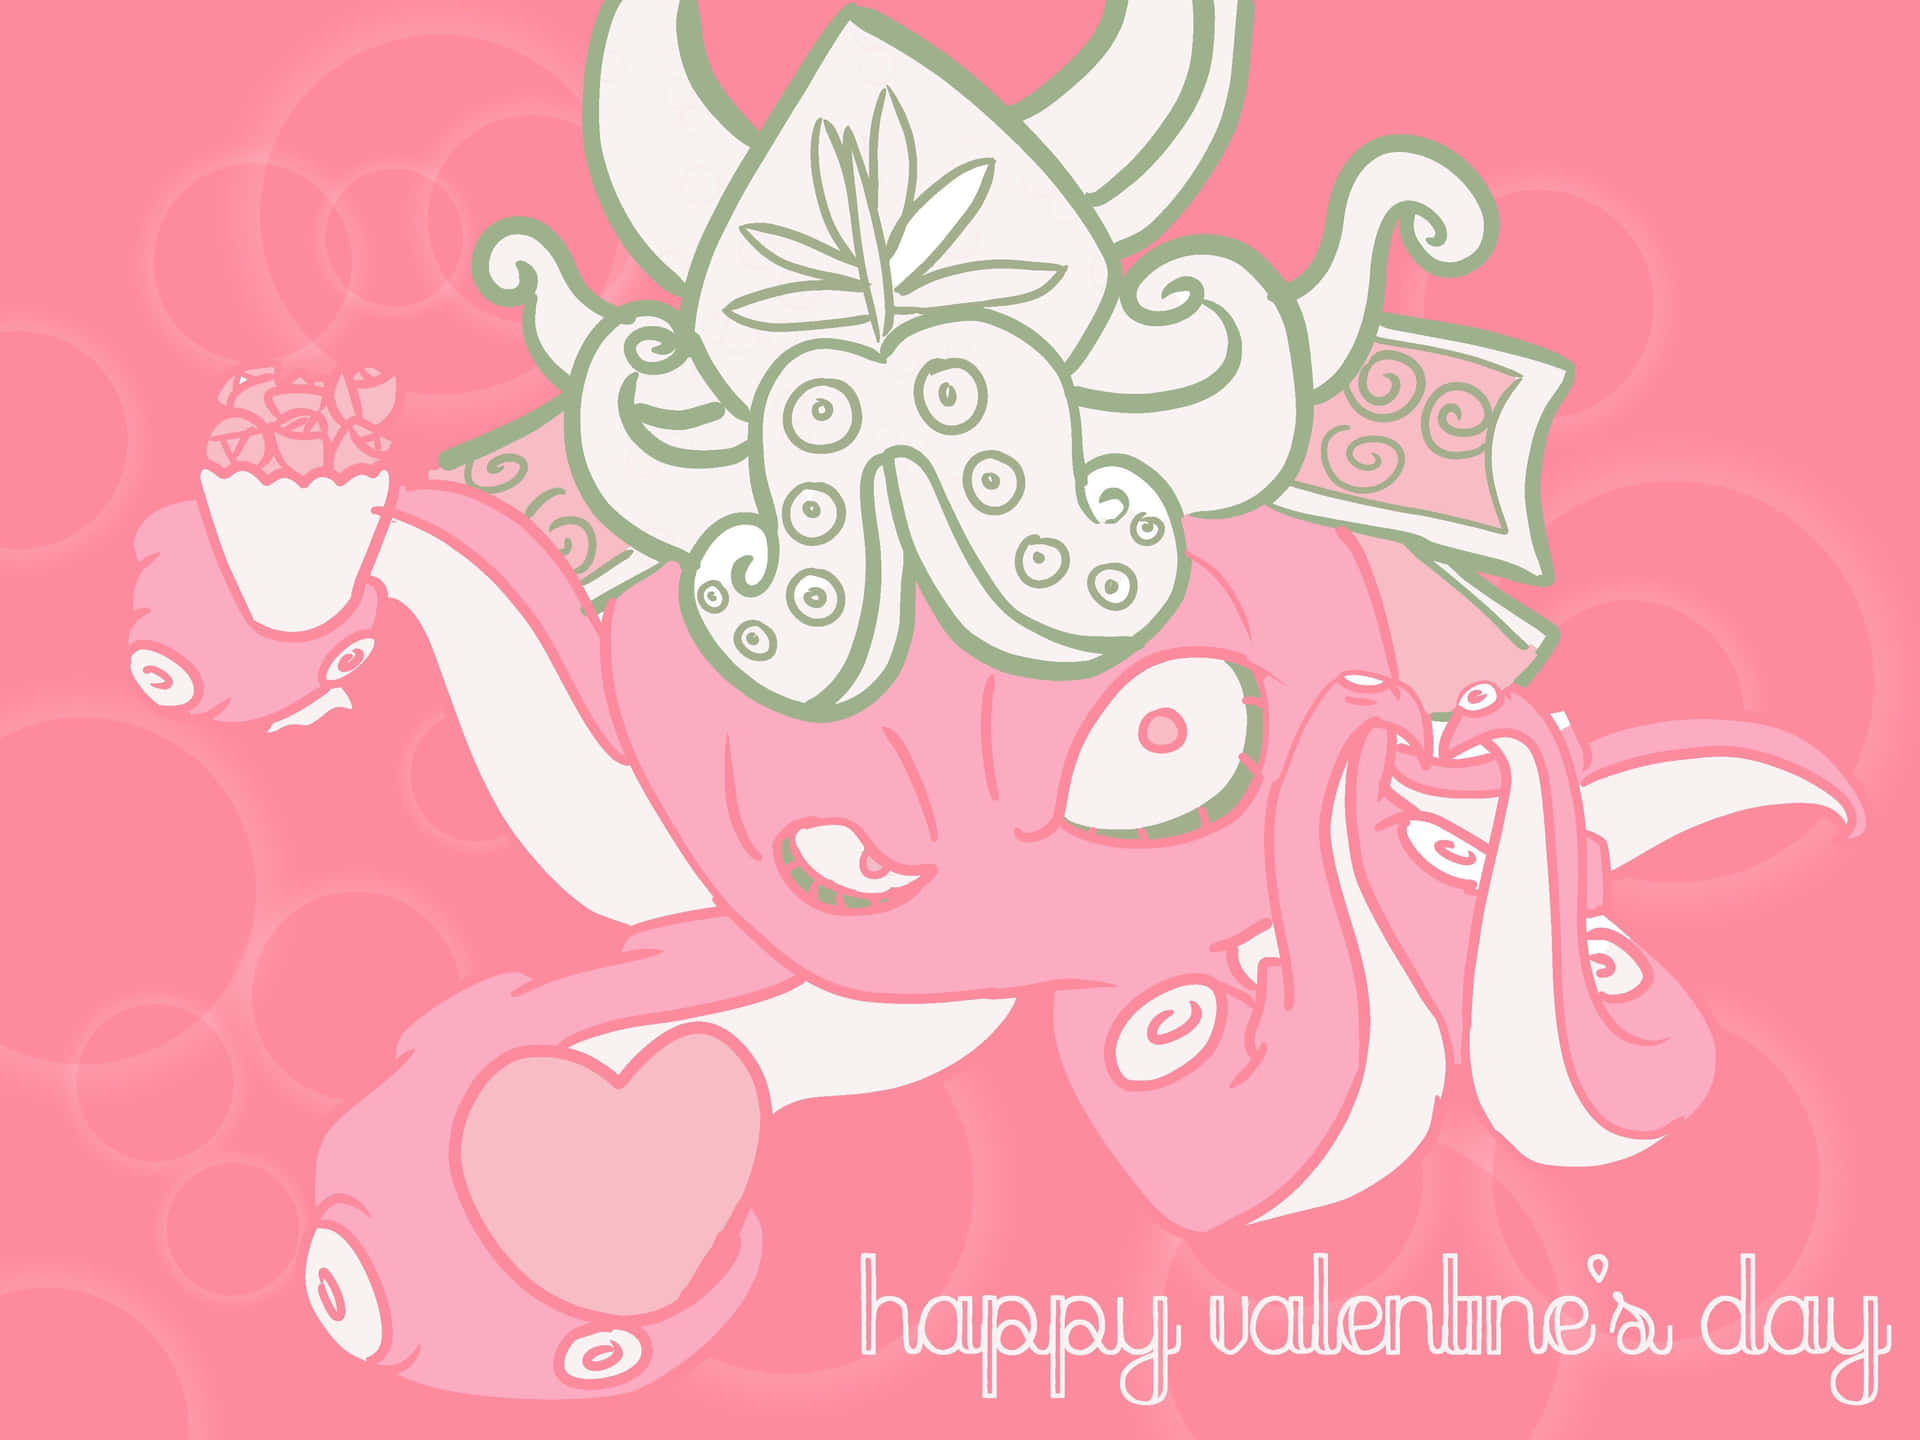 Wishing you a happy Valentine's day